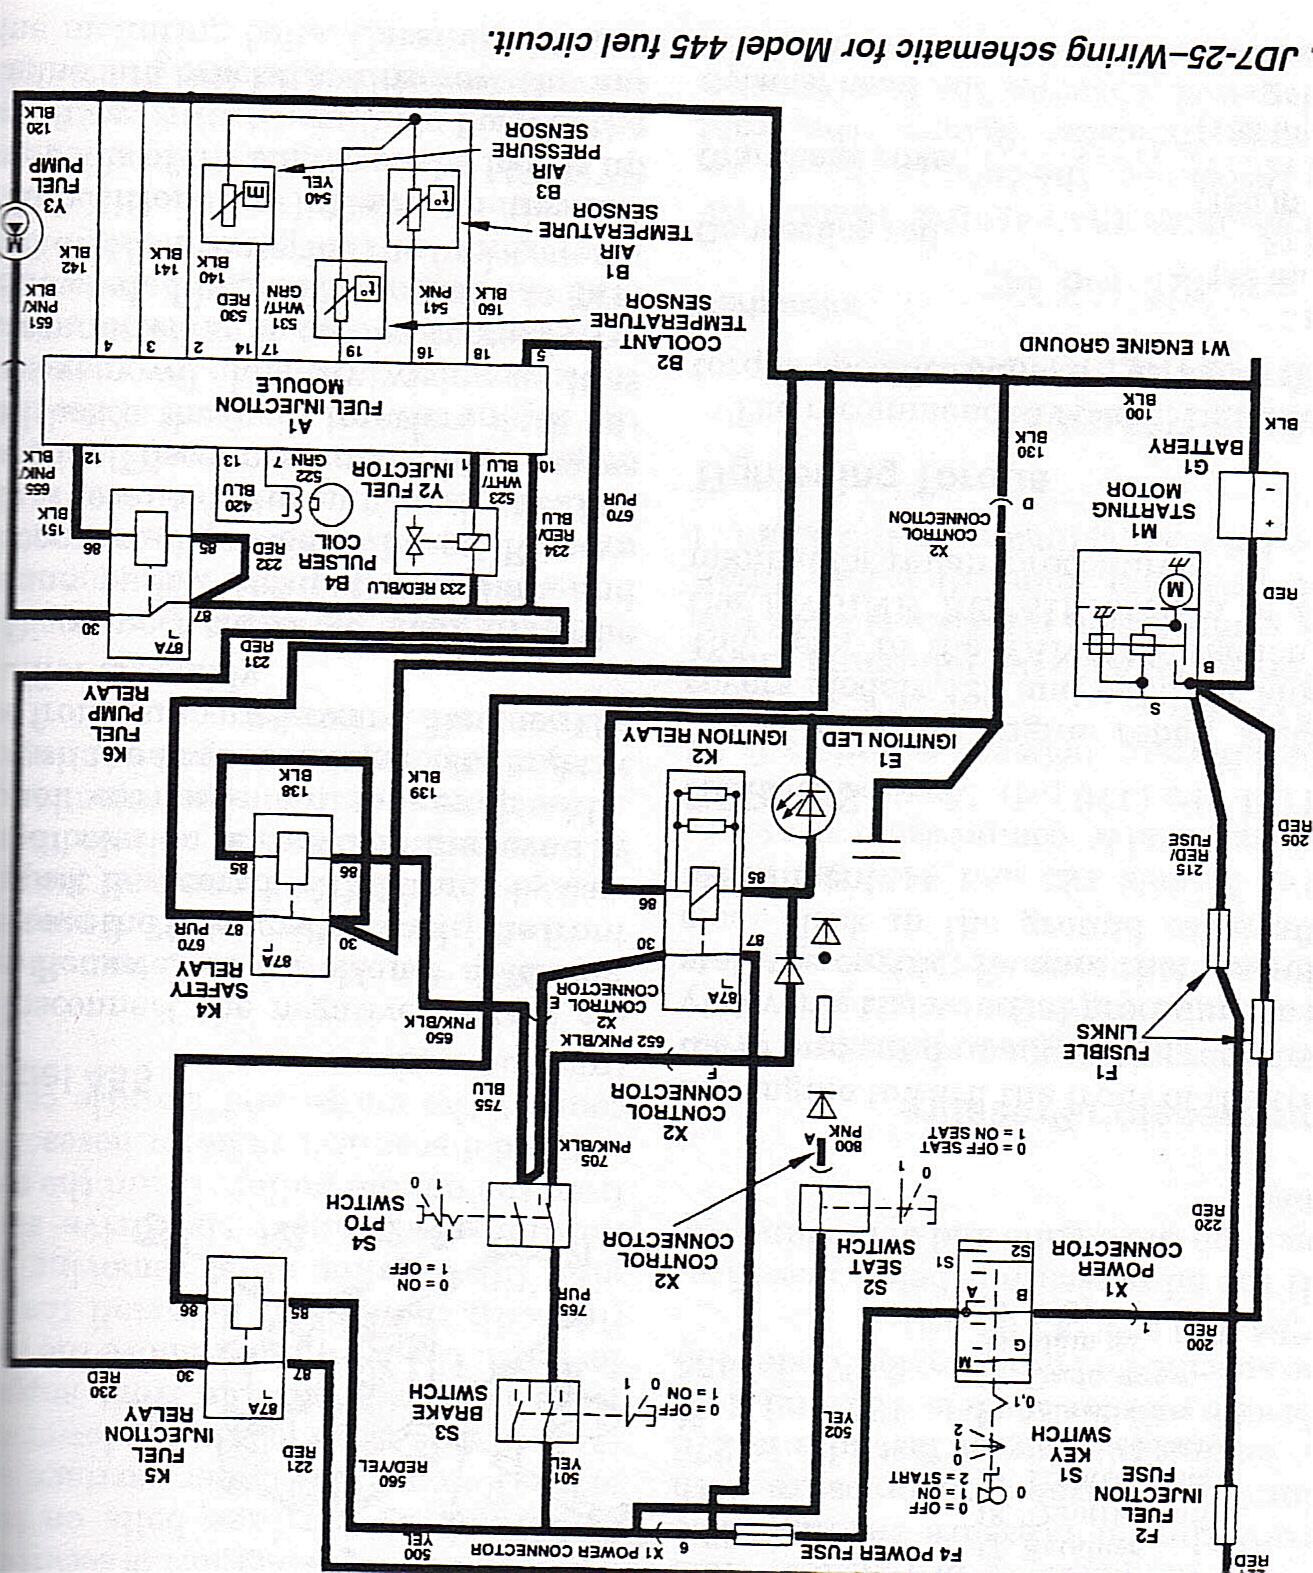 john deere x485 wiring diagram